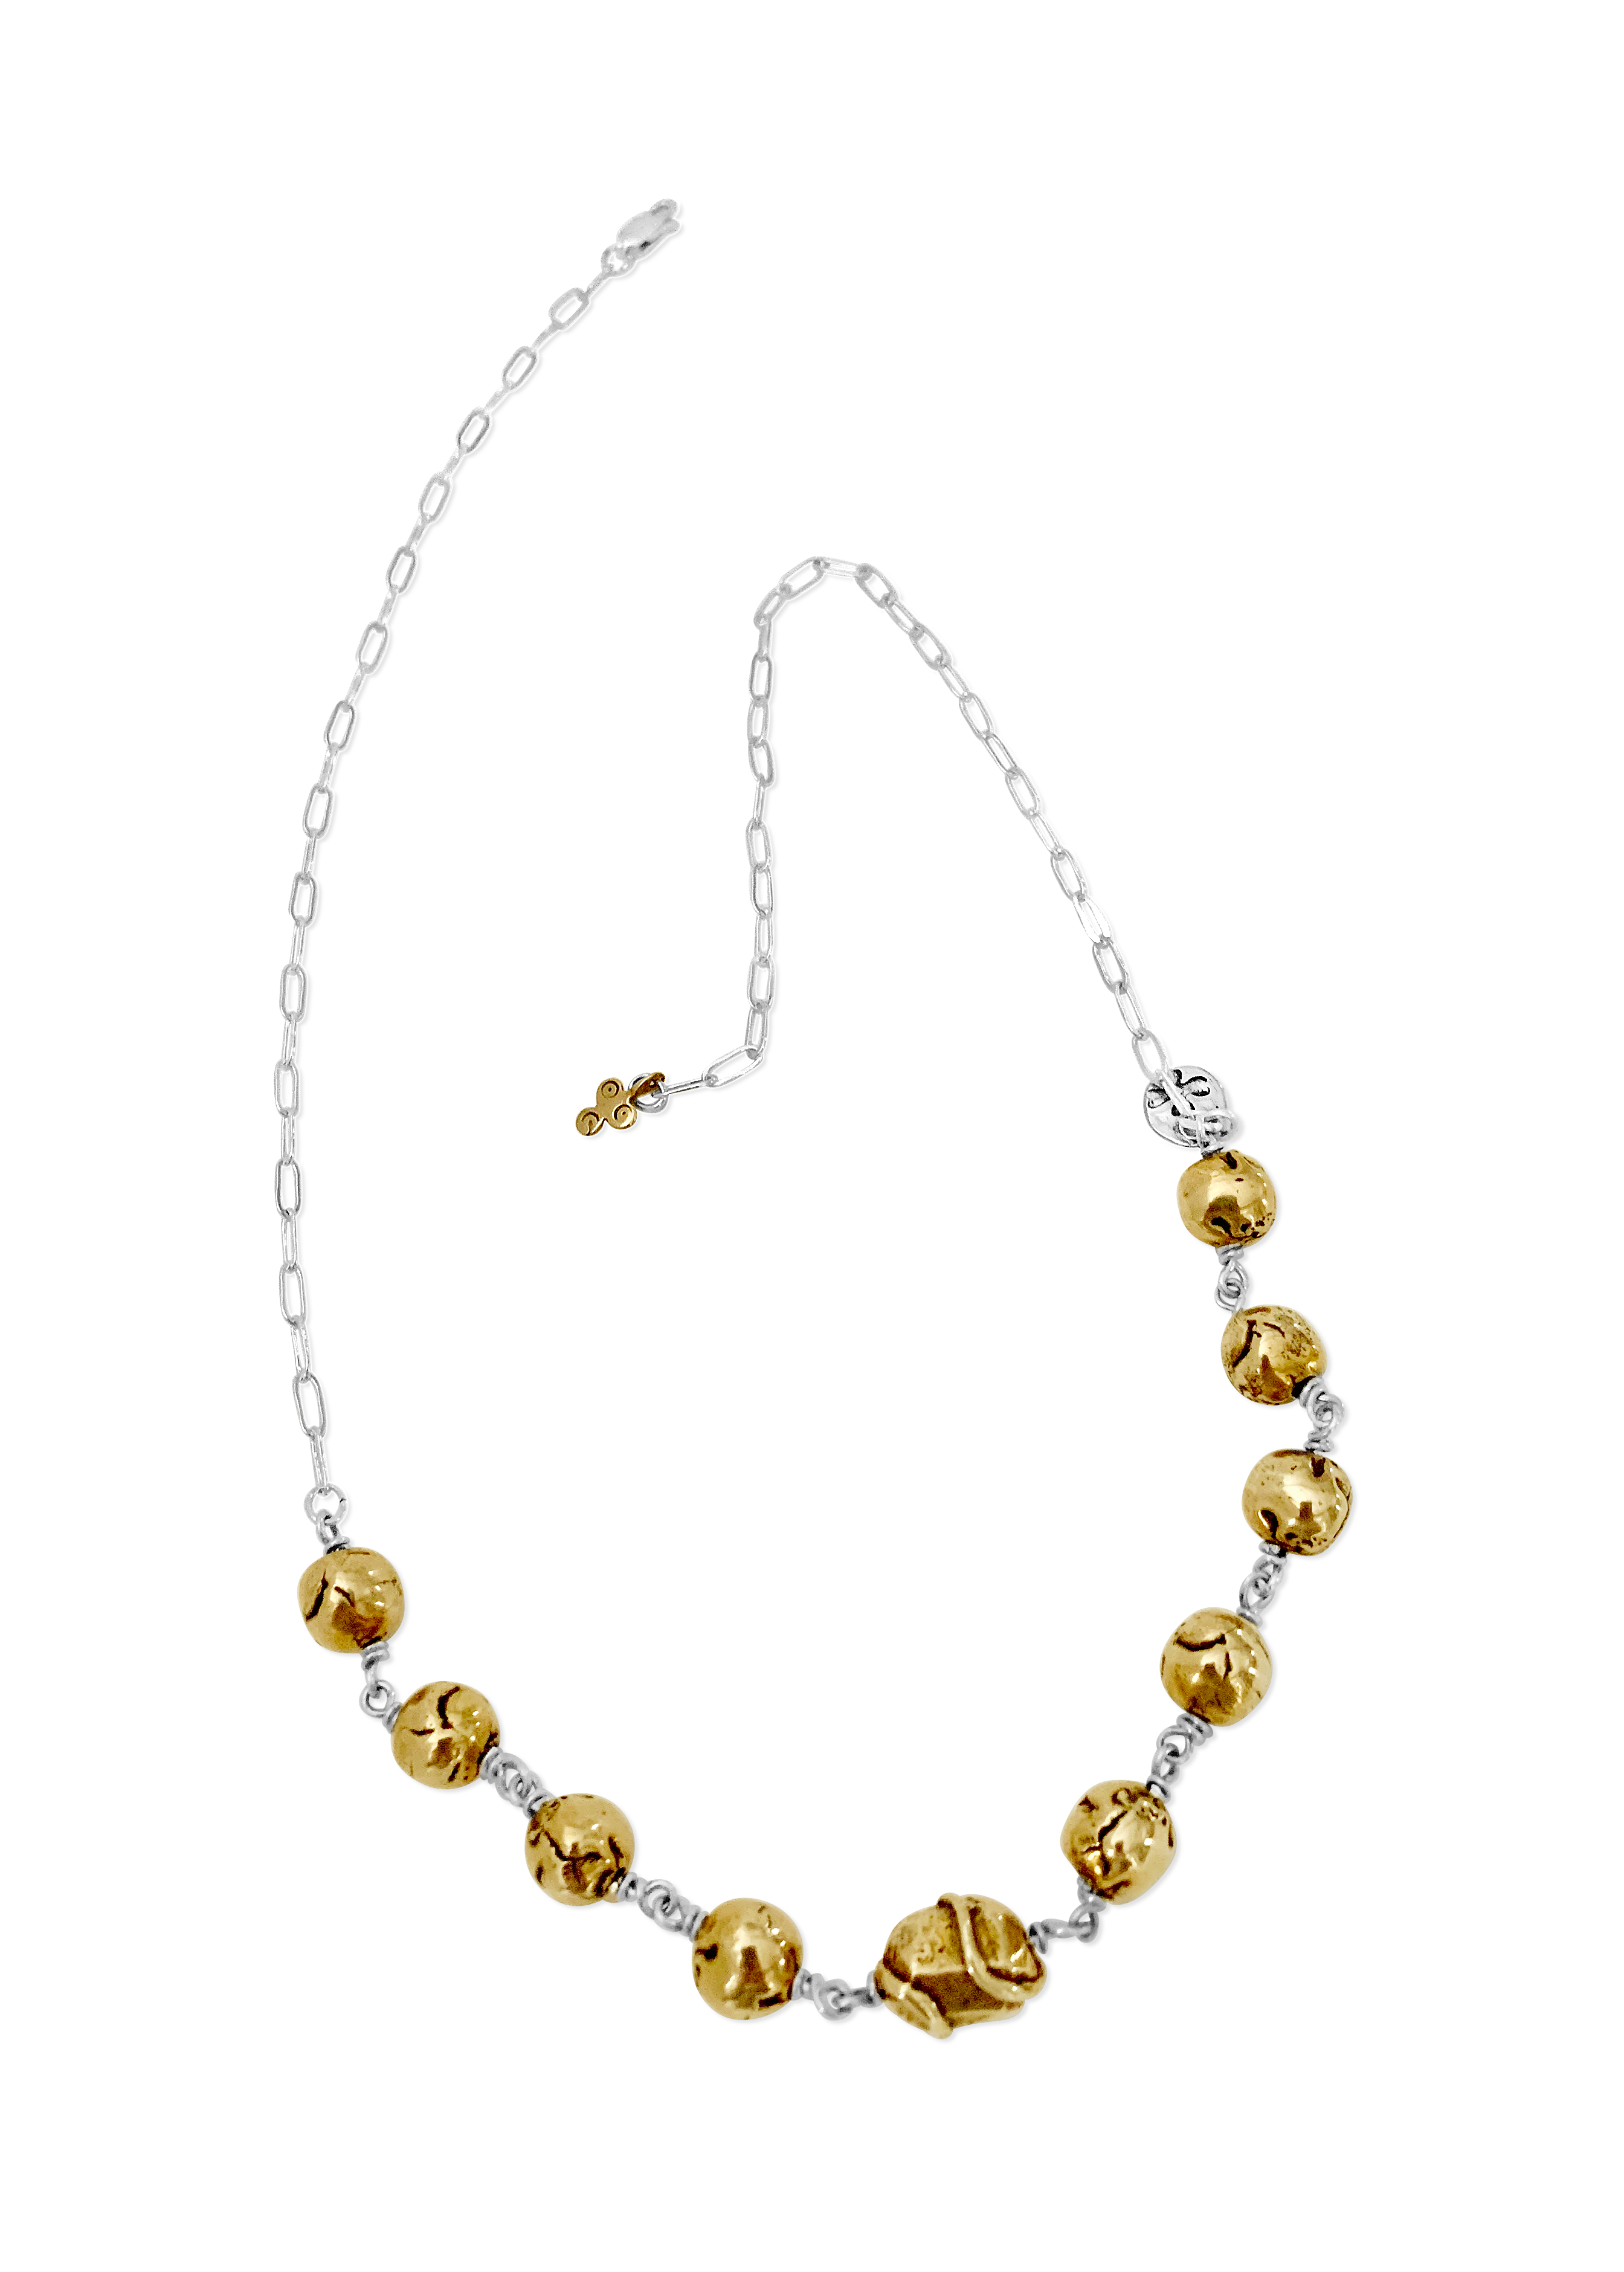 Wash-a-Shore Bronze Pebble Necklace